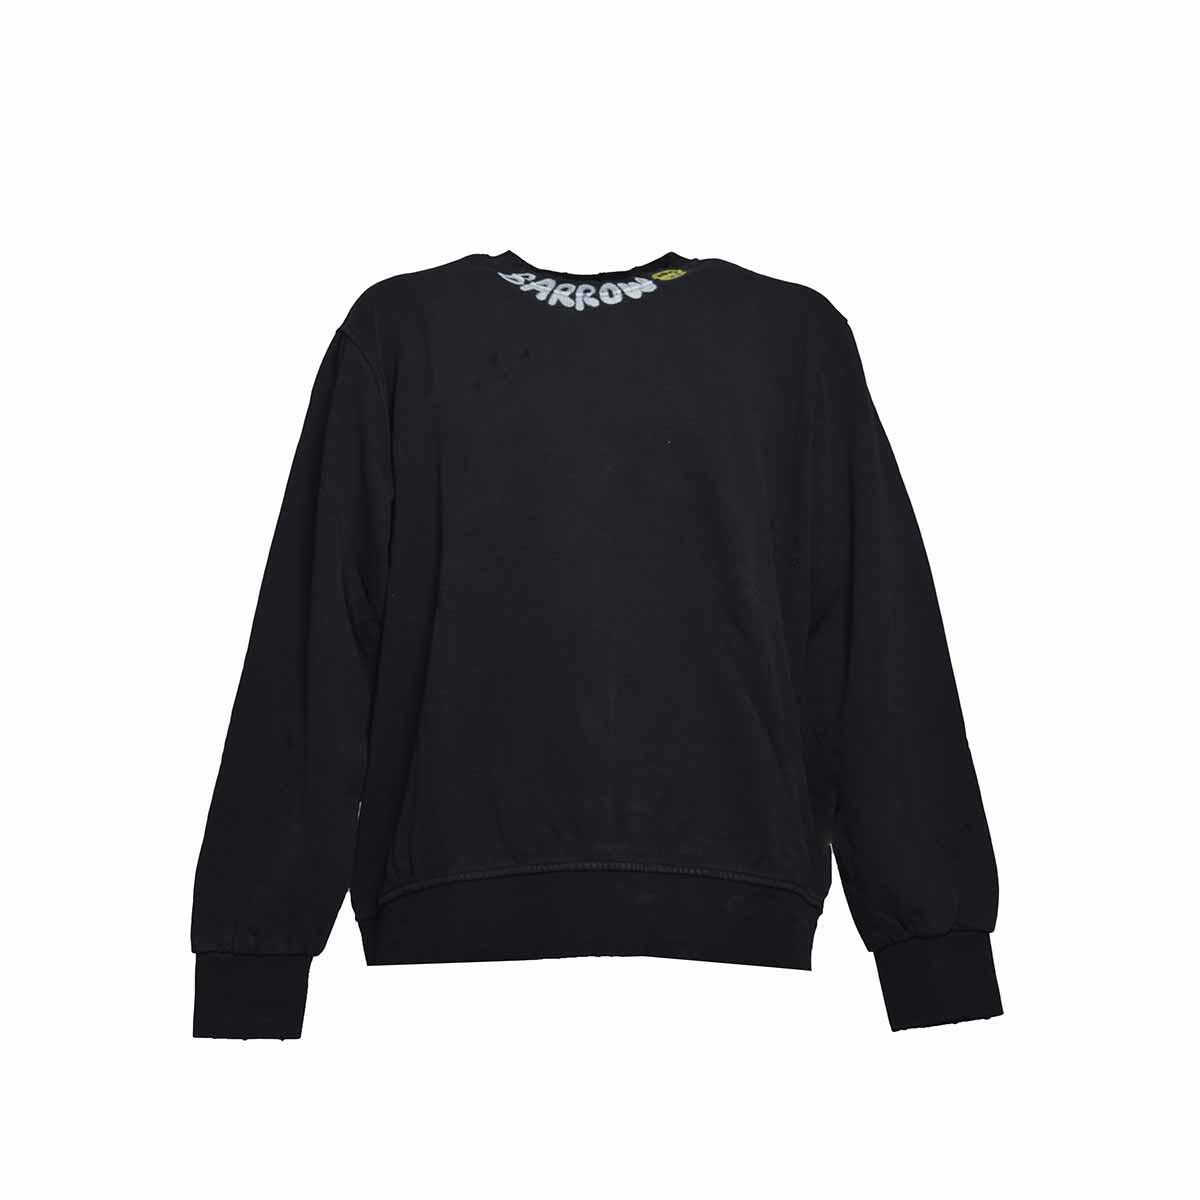 BARROW BARROW Black cotton sweatshirt with logo print on neck Barrow BLACK